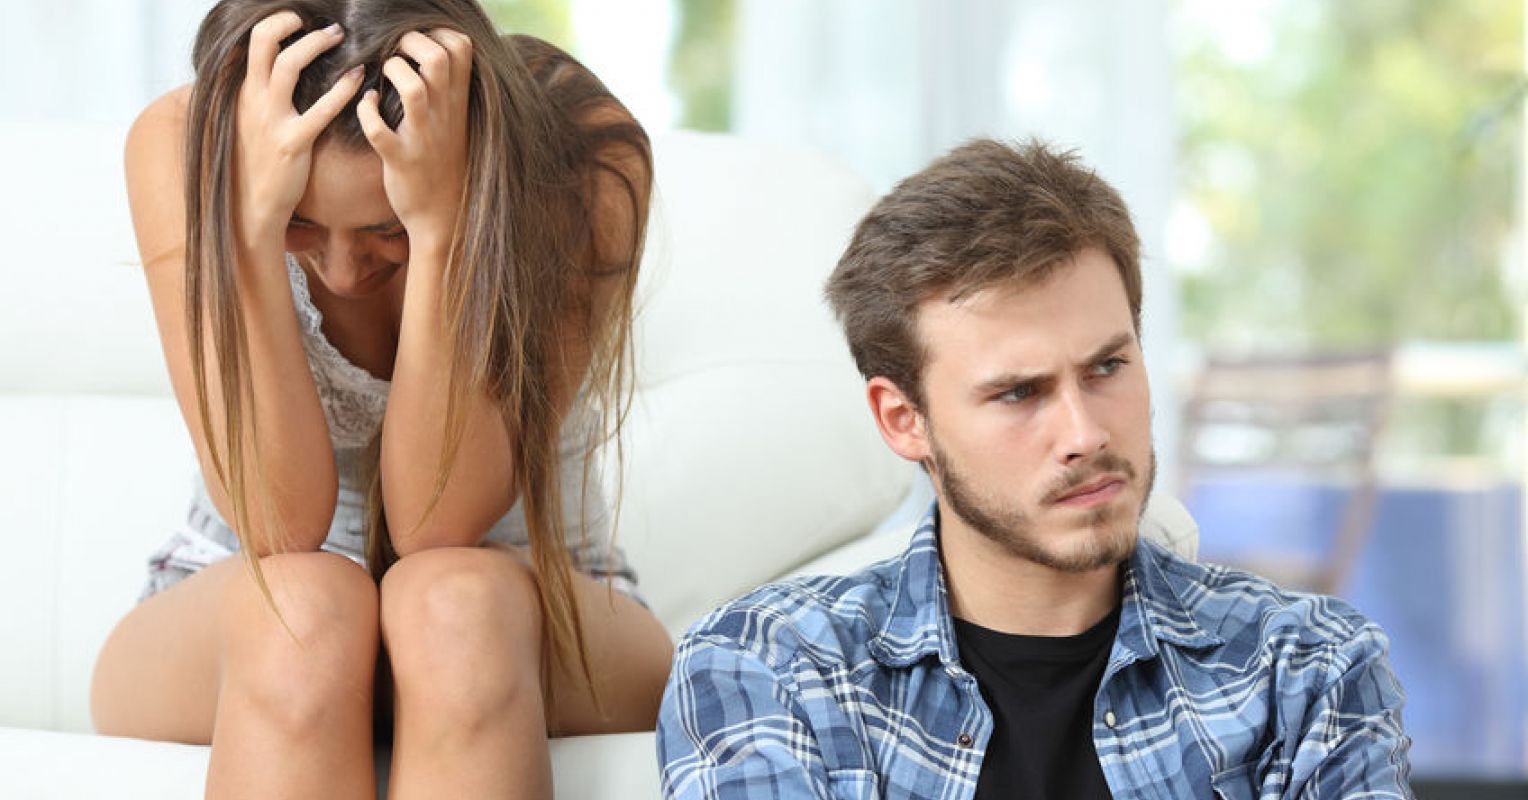 Do avoidant partners cheat?